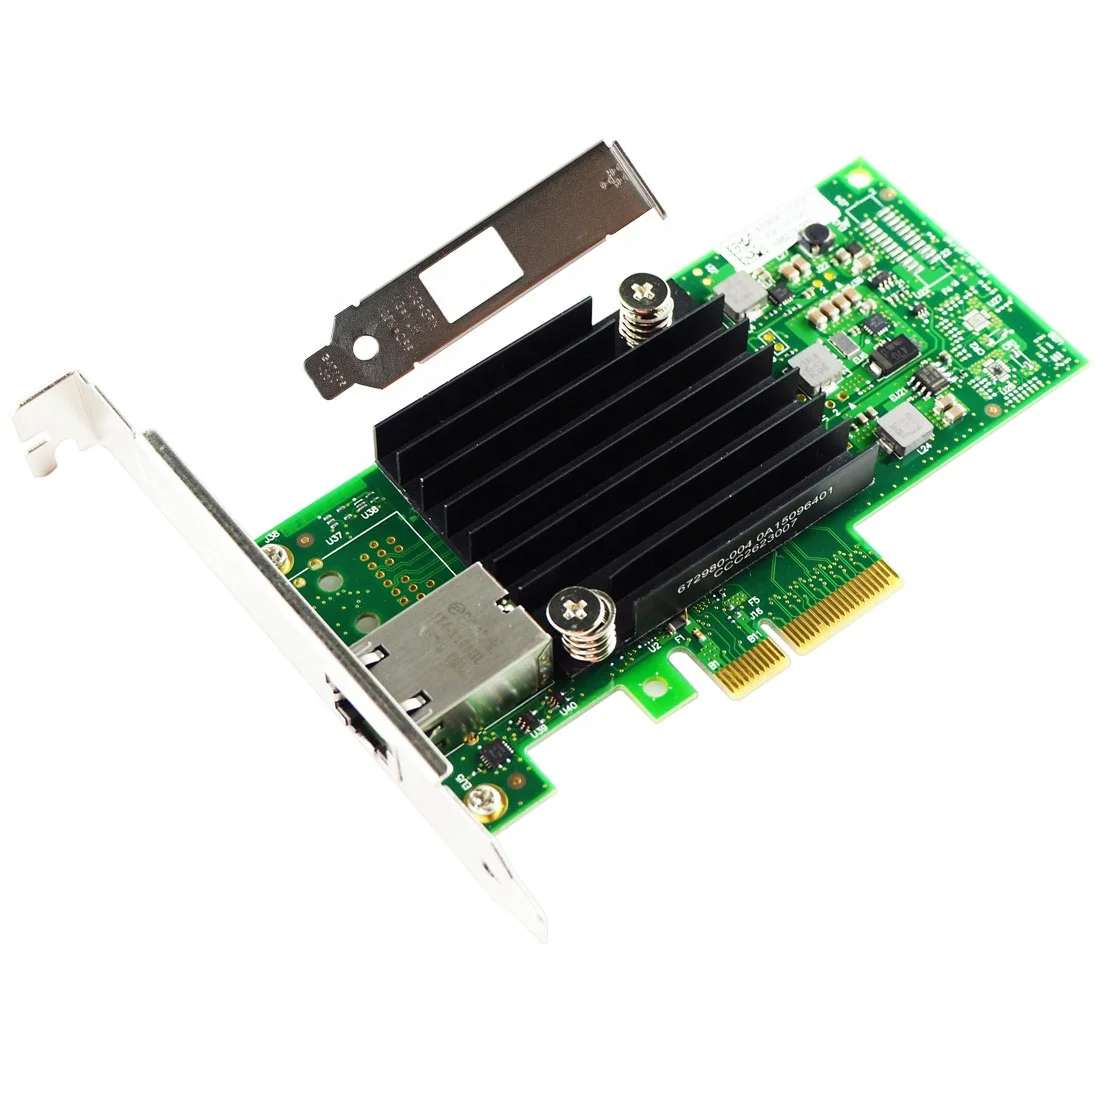 Tangxi 10 Gigabit Ethernet Server Network Card Main Control Chip 10 Gigabit 10G Network Card Chip for Intel X550-T1 Ethernet Converged Network Adapter PCI-E X4 v3.0 8.0 GT/s 